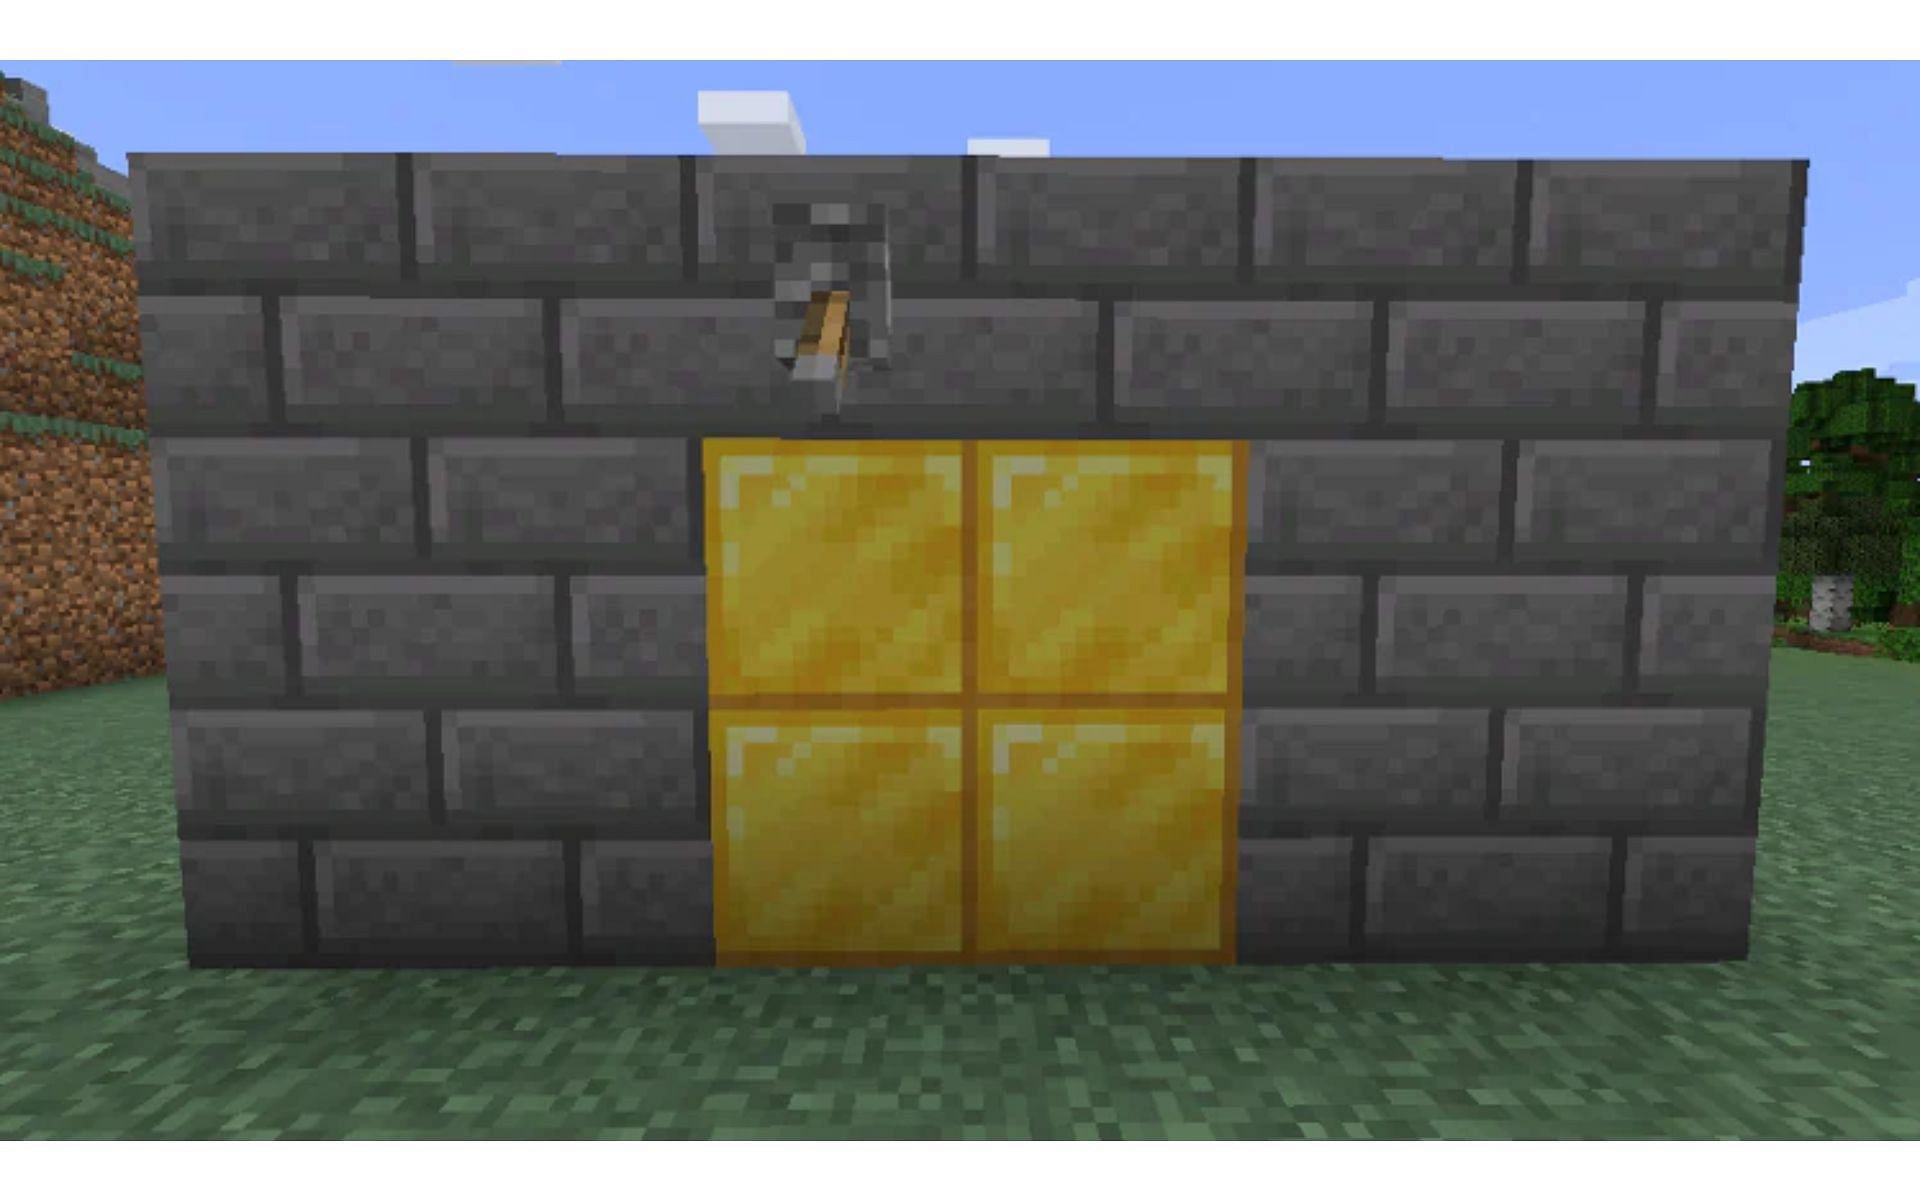 Players can make a hidden door by using redstone engineering (Image via Mojang)